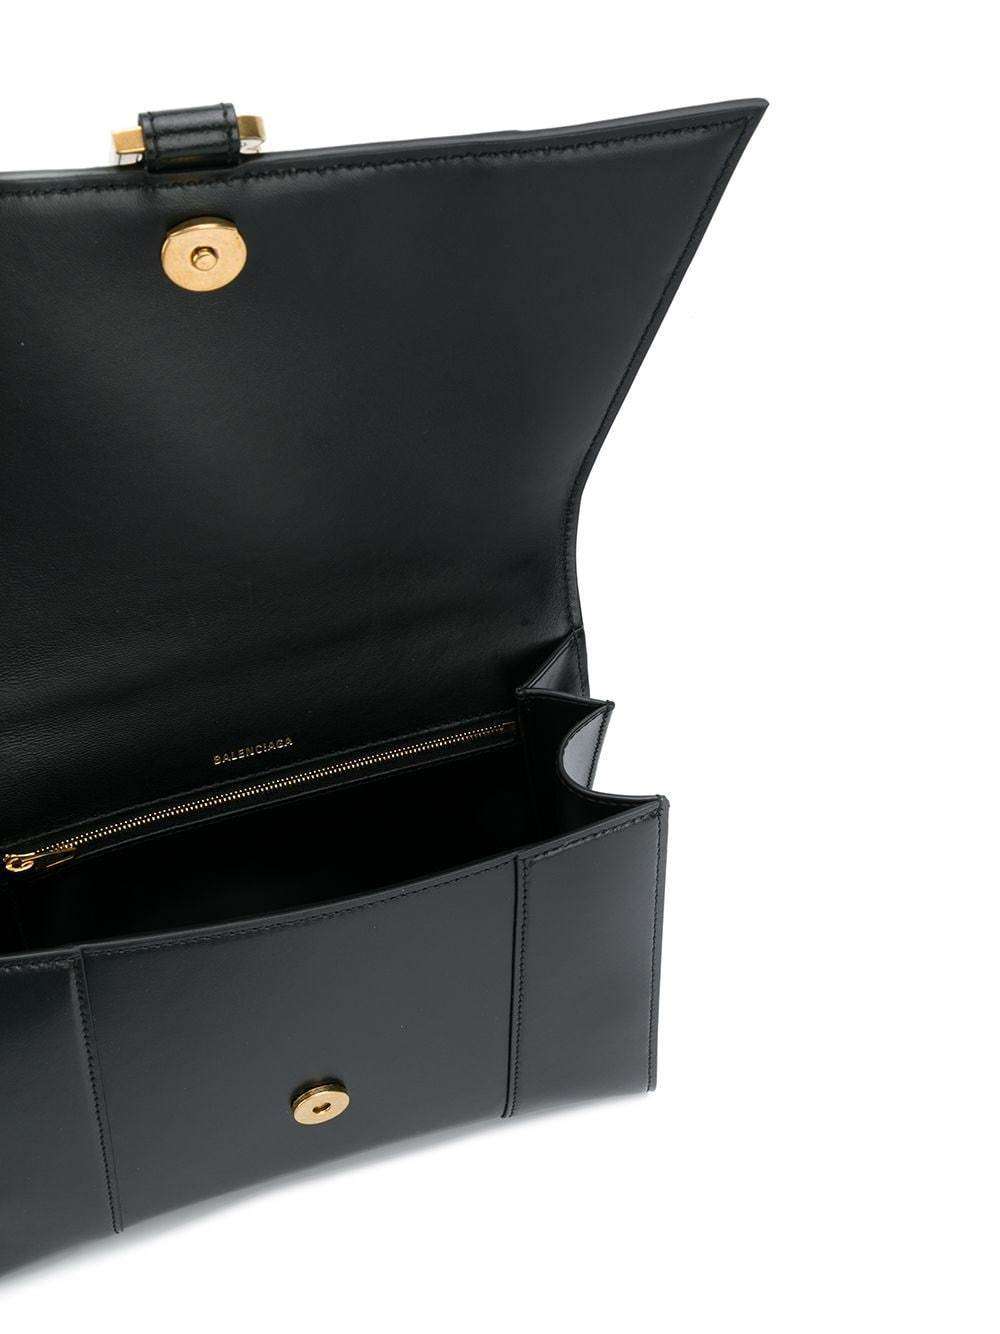 Hourglass Medium Top Handle Bag in Black | Cosette